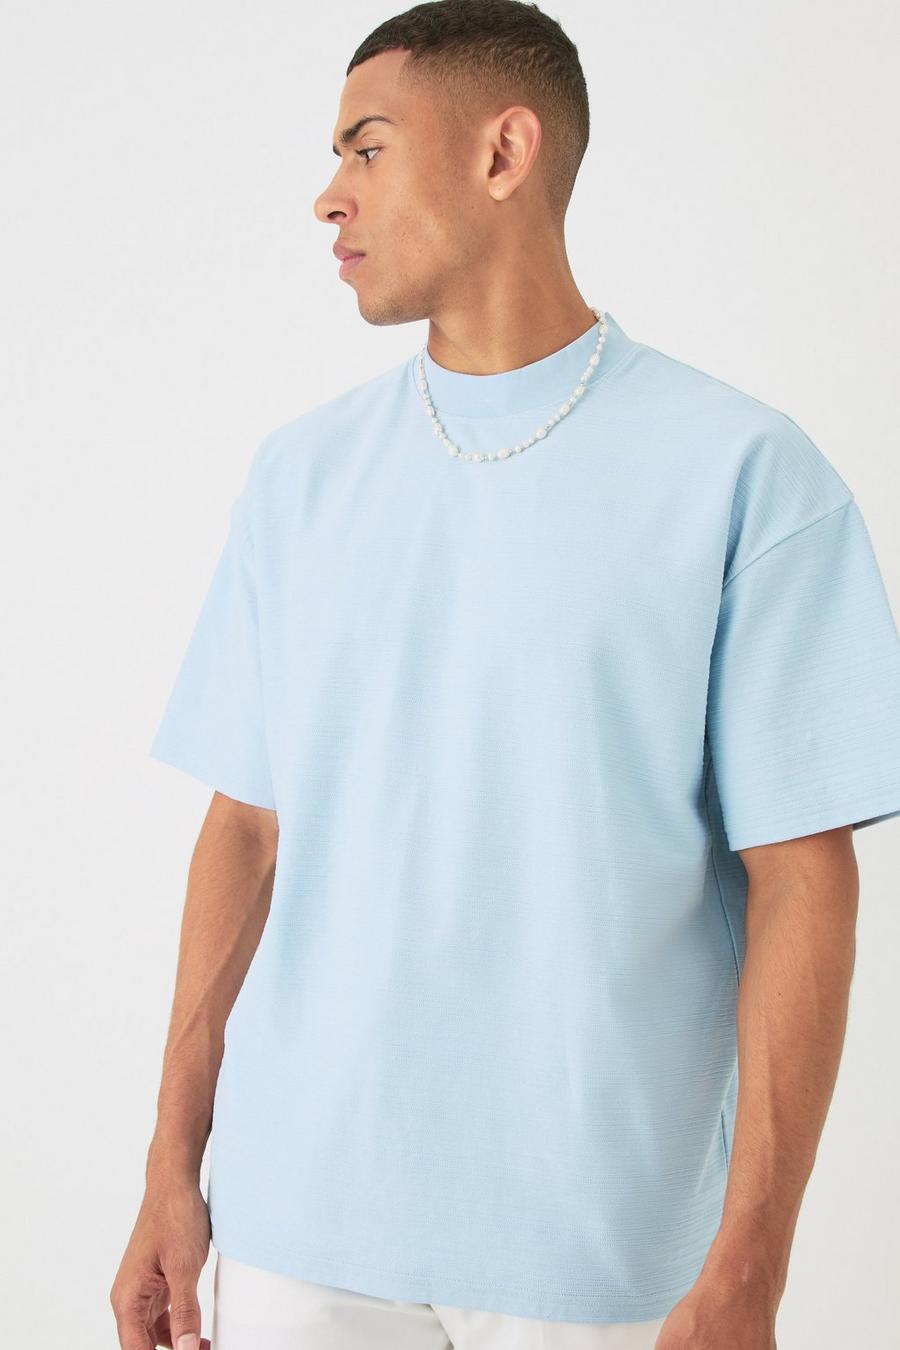 Dusty blue Oversized Jacquard Raised Striped Extended Neck T-shirt